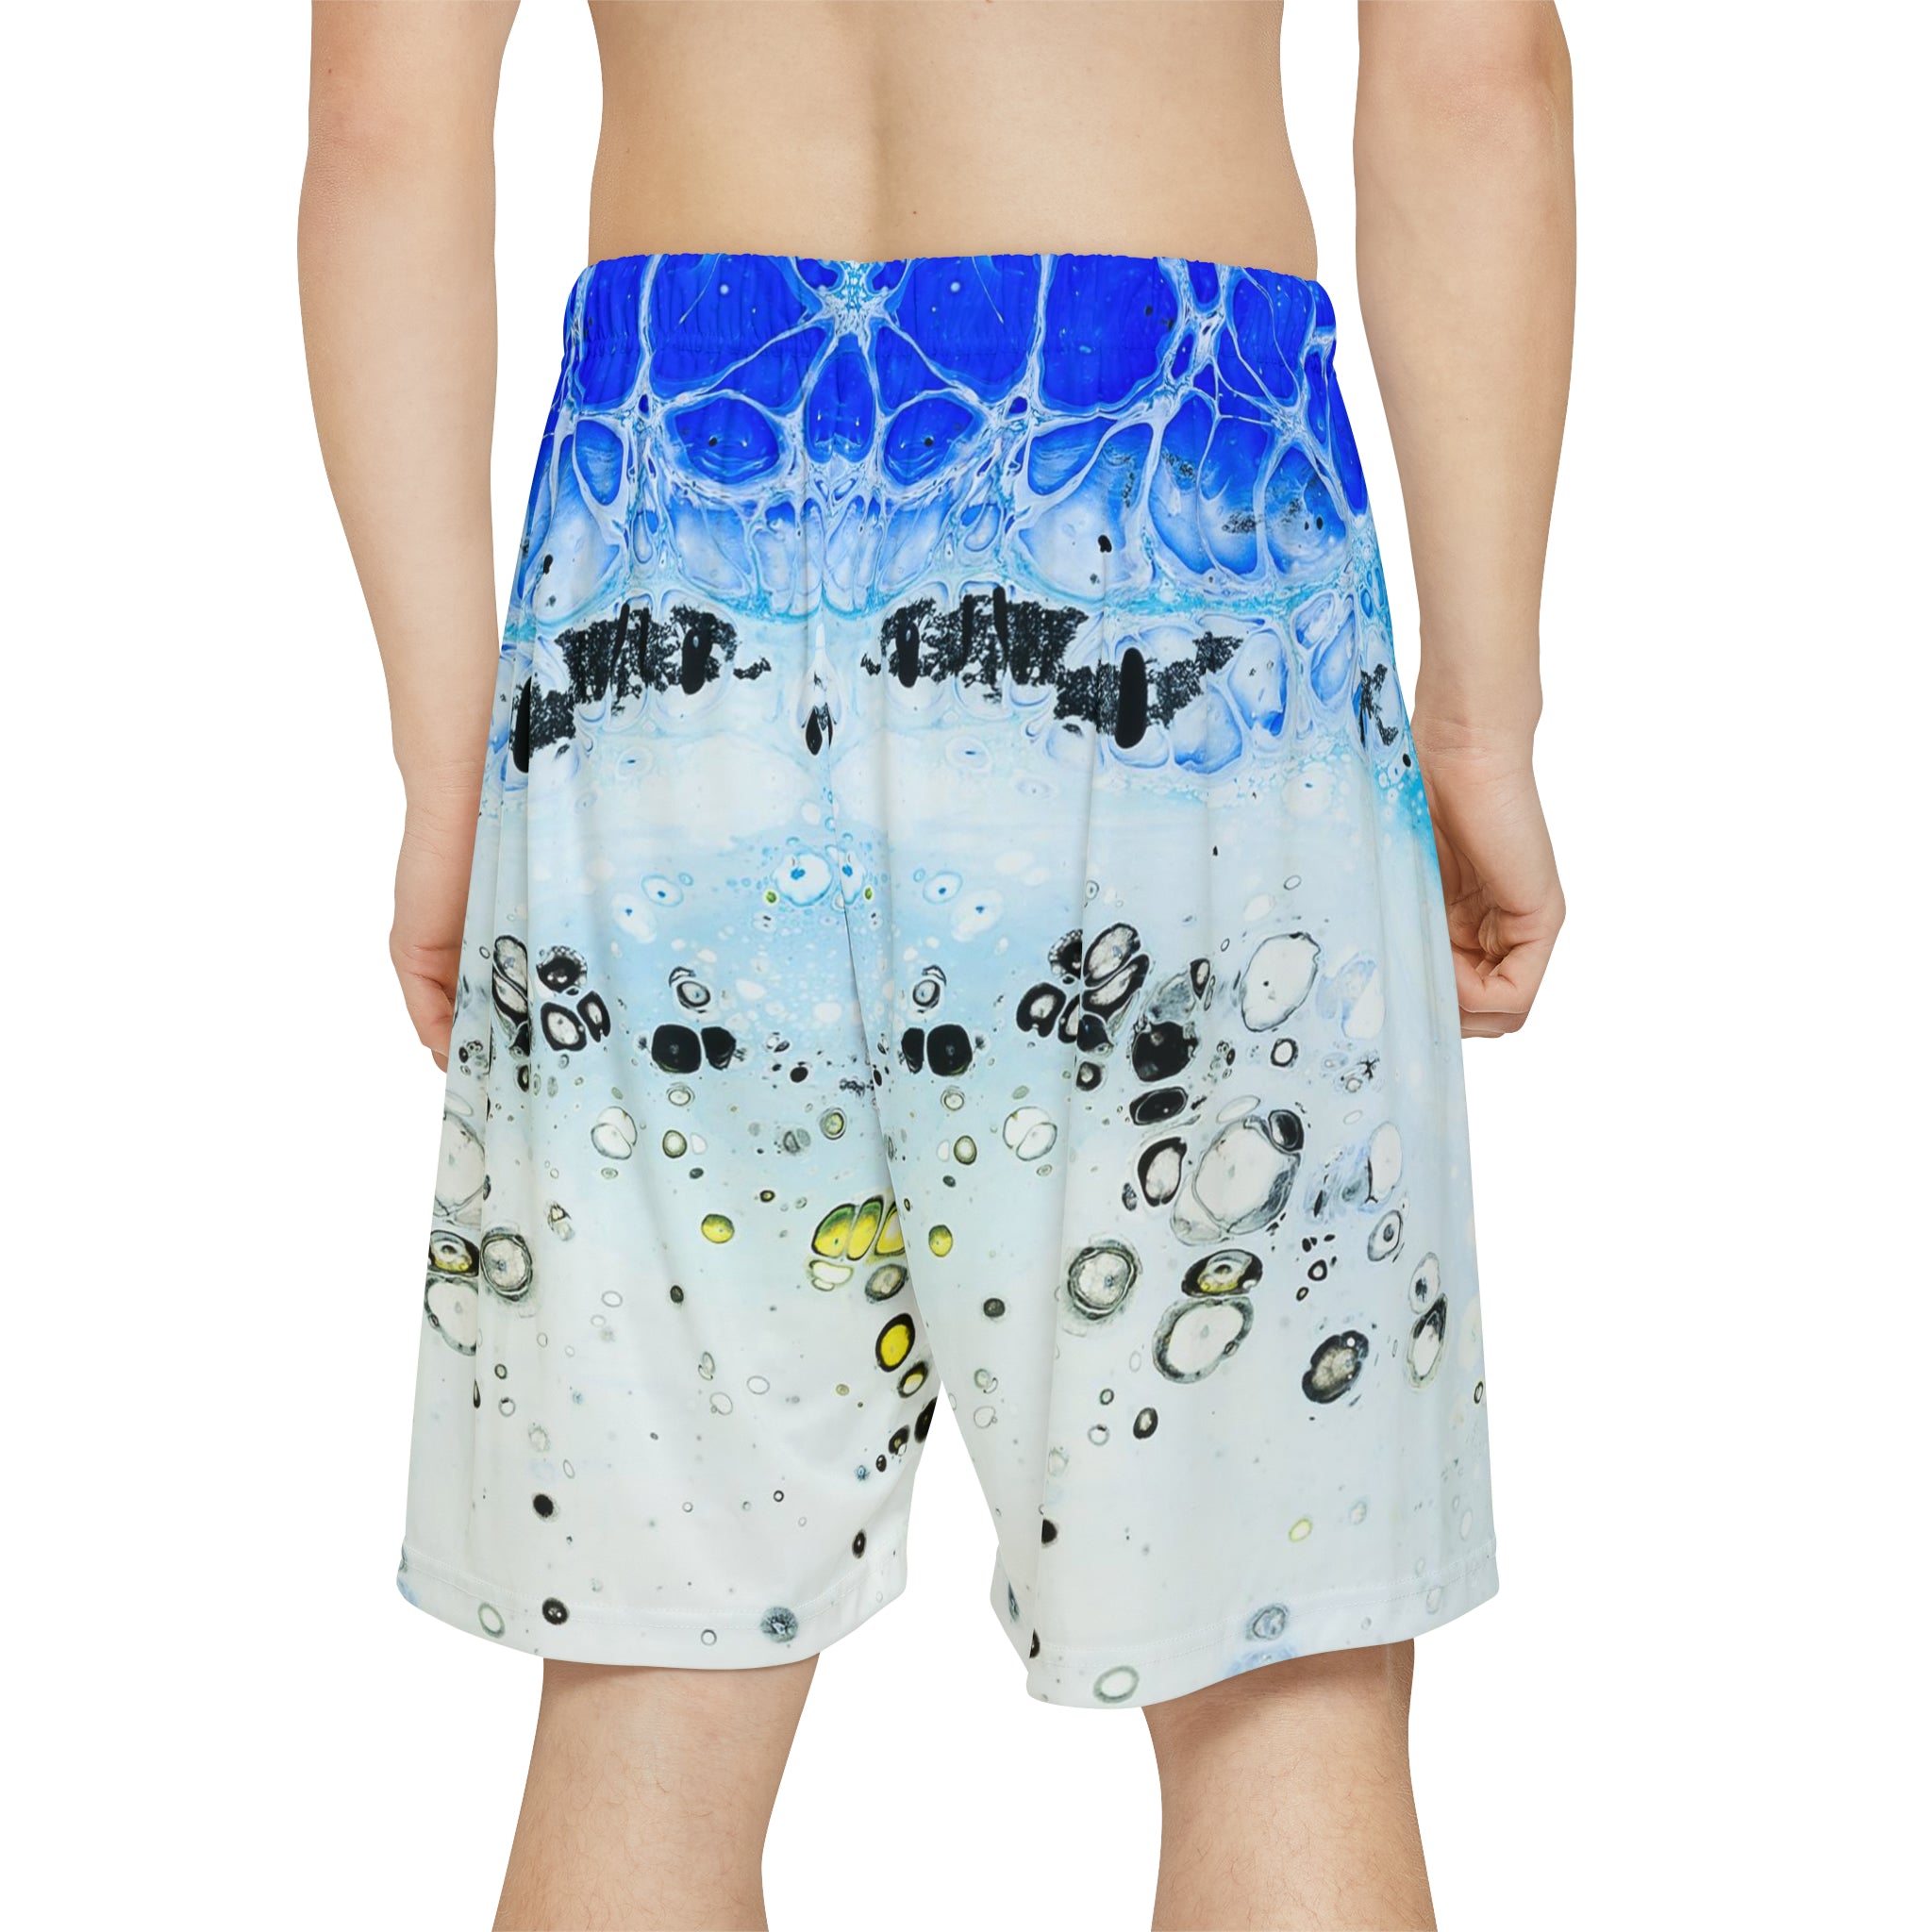 Cellonious Beach - Men’s Sports Shorts